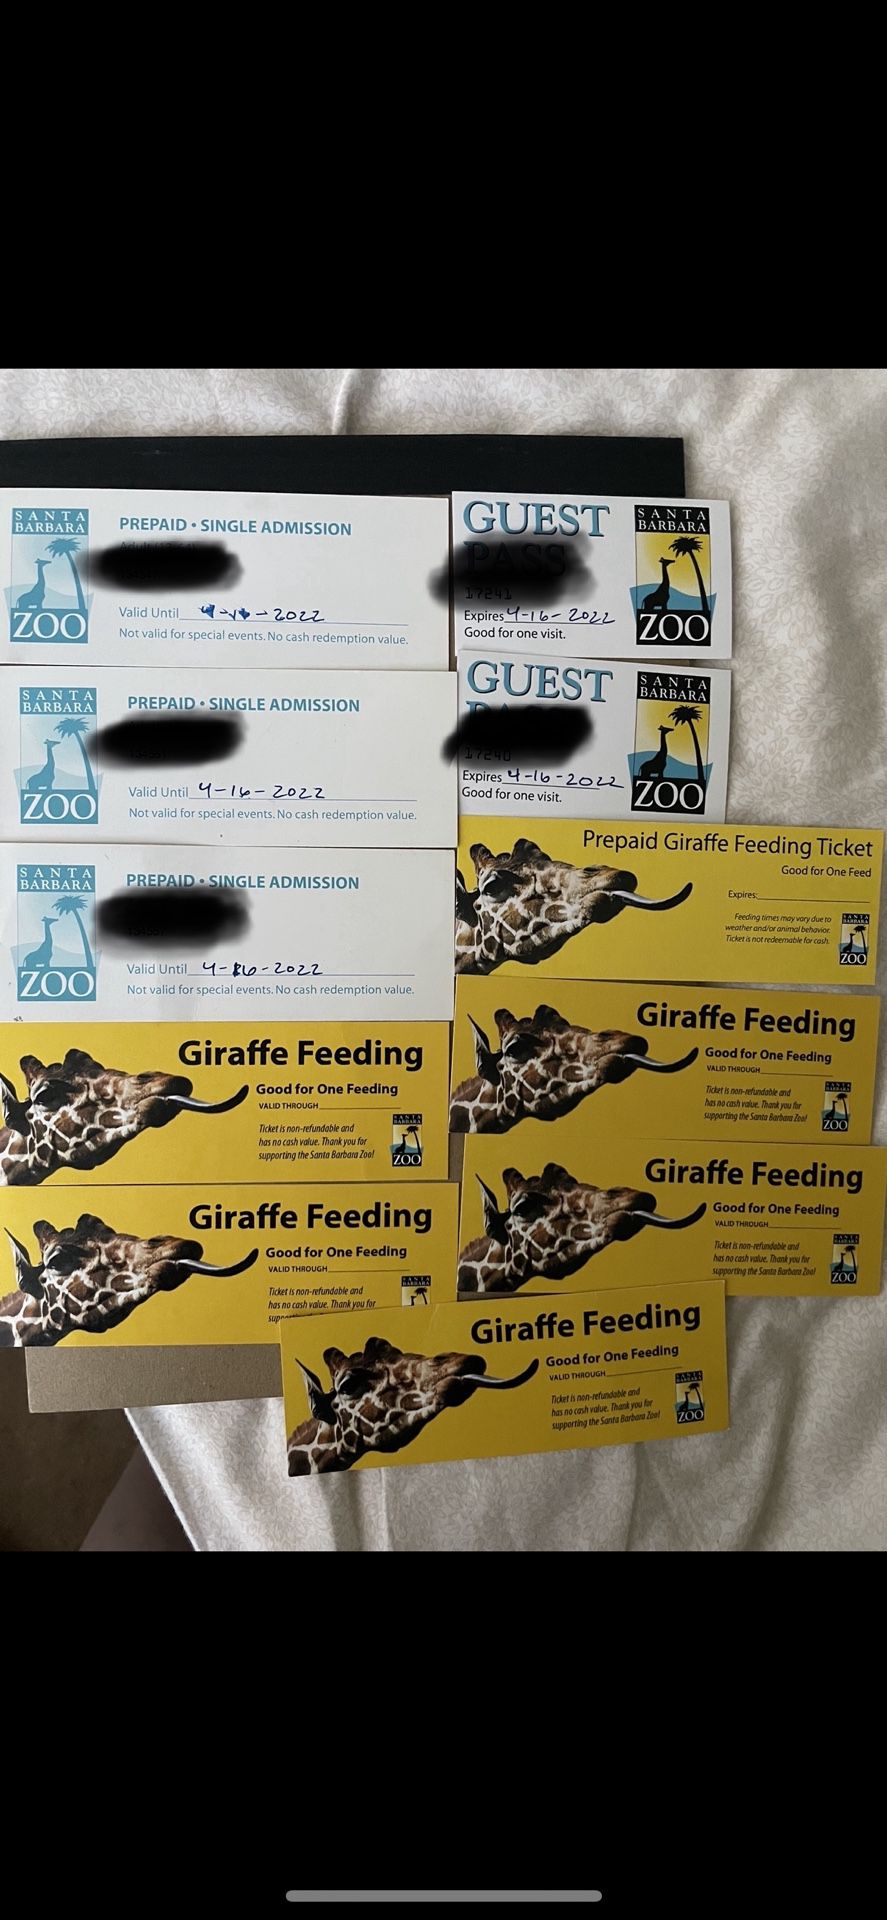 Santa Barbara Zoo Tickets 5 Anyday Admission And 5 Feeding giraffe tickets